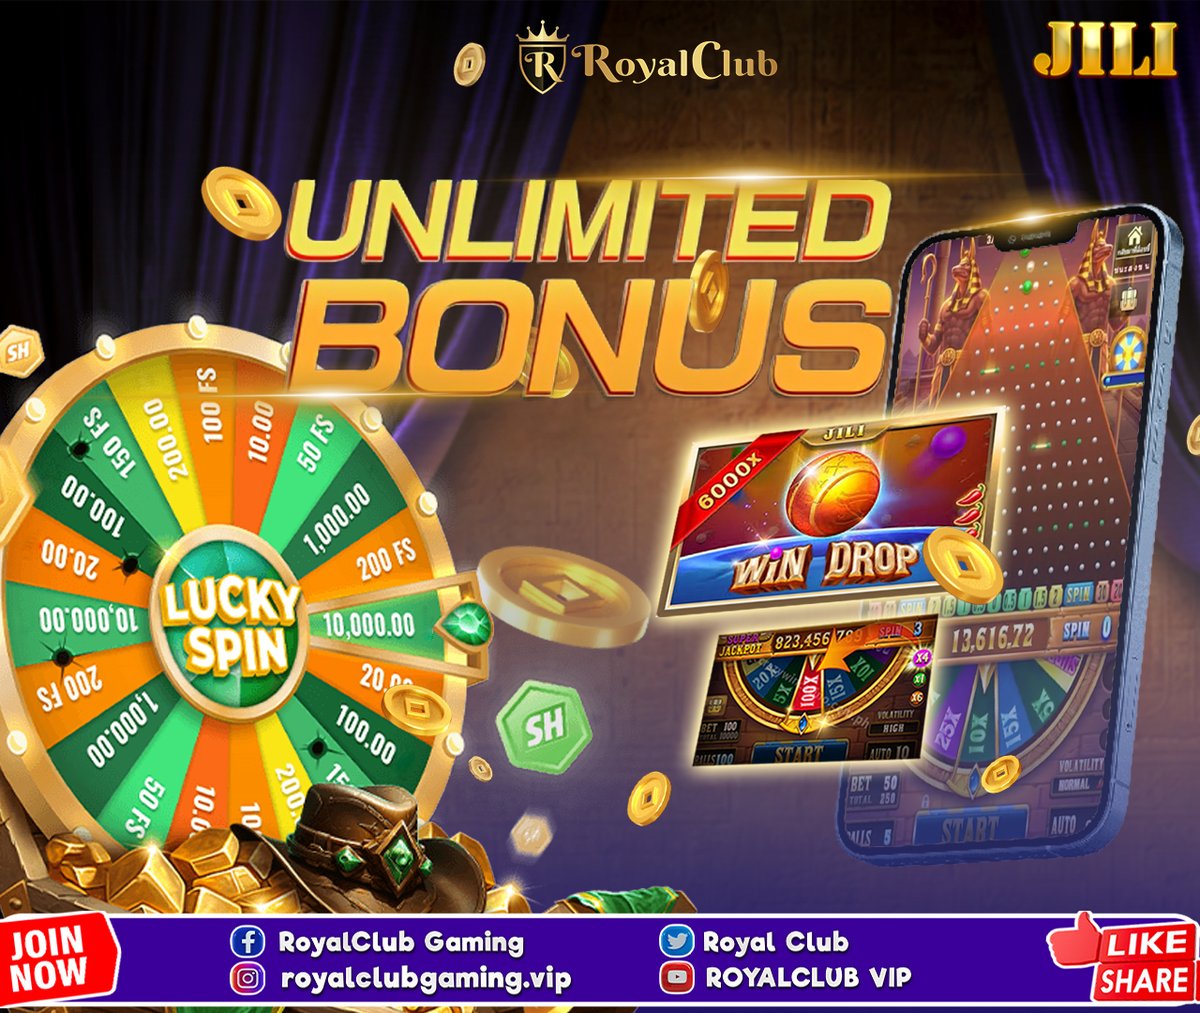 How to Claim Unlimited Bonus?

Claim unlimited bonuses at RoyalClub now! 🎉💰

अंतहीन पुरस्कारों के लिए आज ही साइन अप करें! 🌟

Don't miss out - join at royalclubcasino.in! 🎉🎰

#UnlimitedBonuses #RoyalClub #SignUpToday 🌟💸